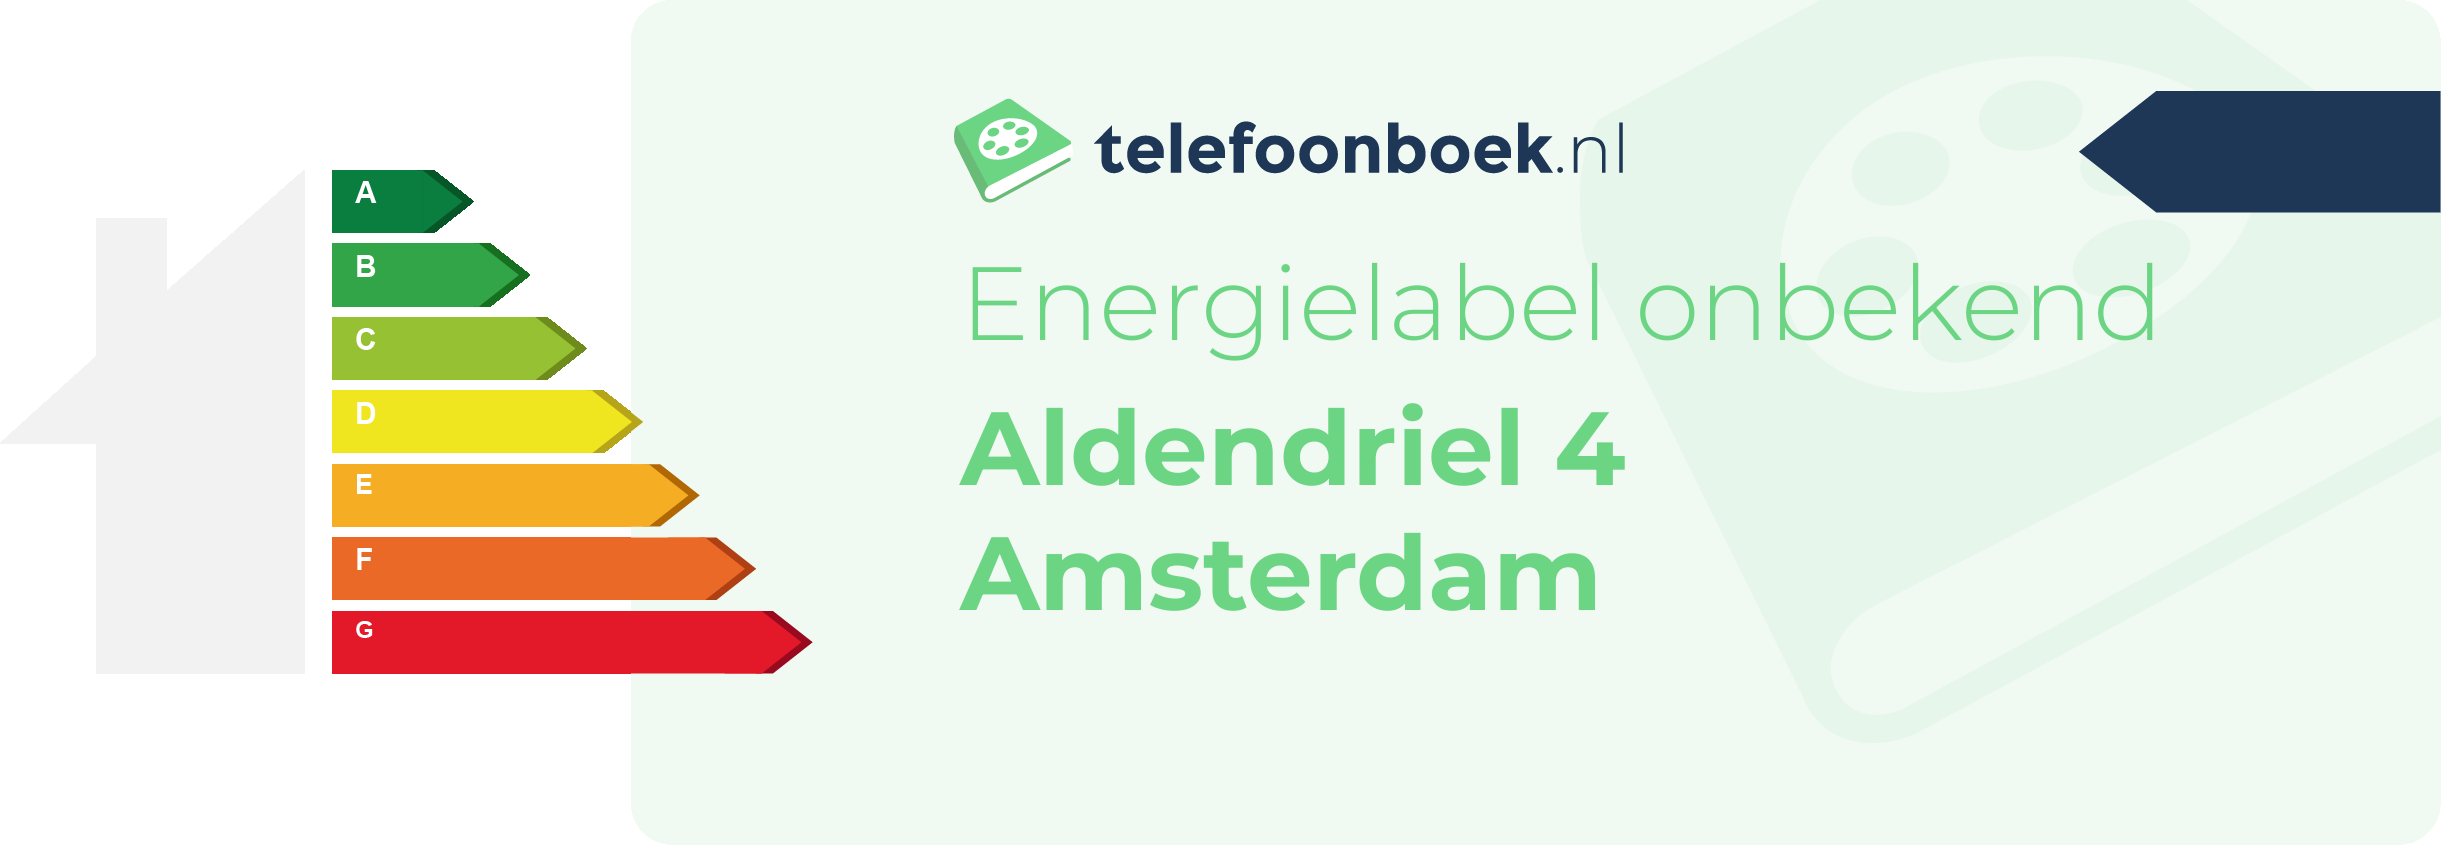 Energielabel Aldendriel 4 Amsterdam